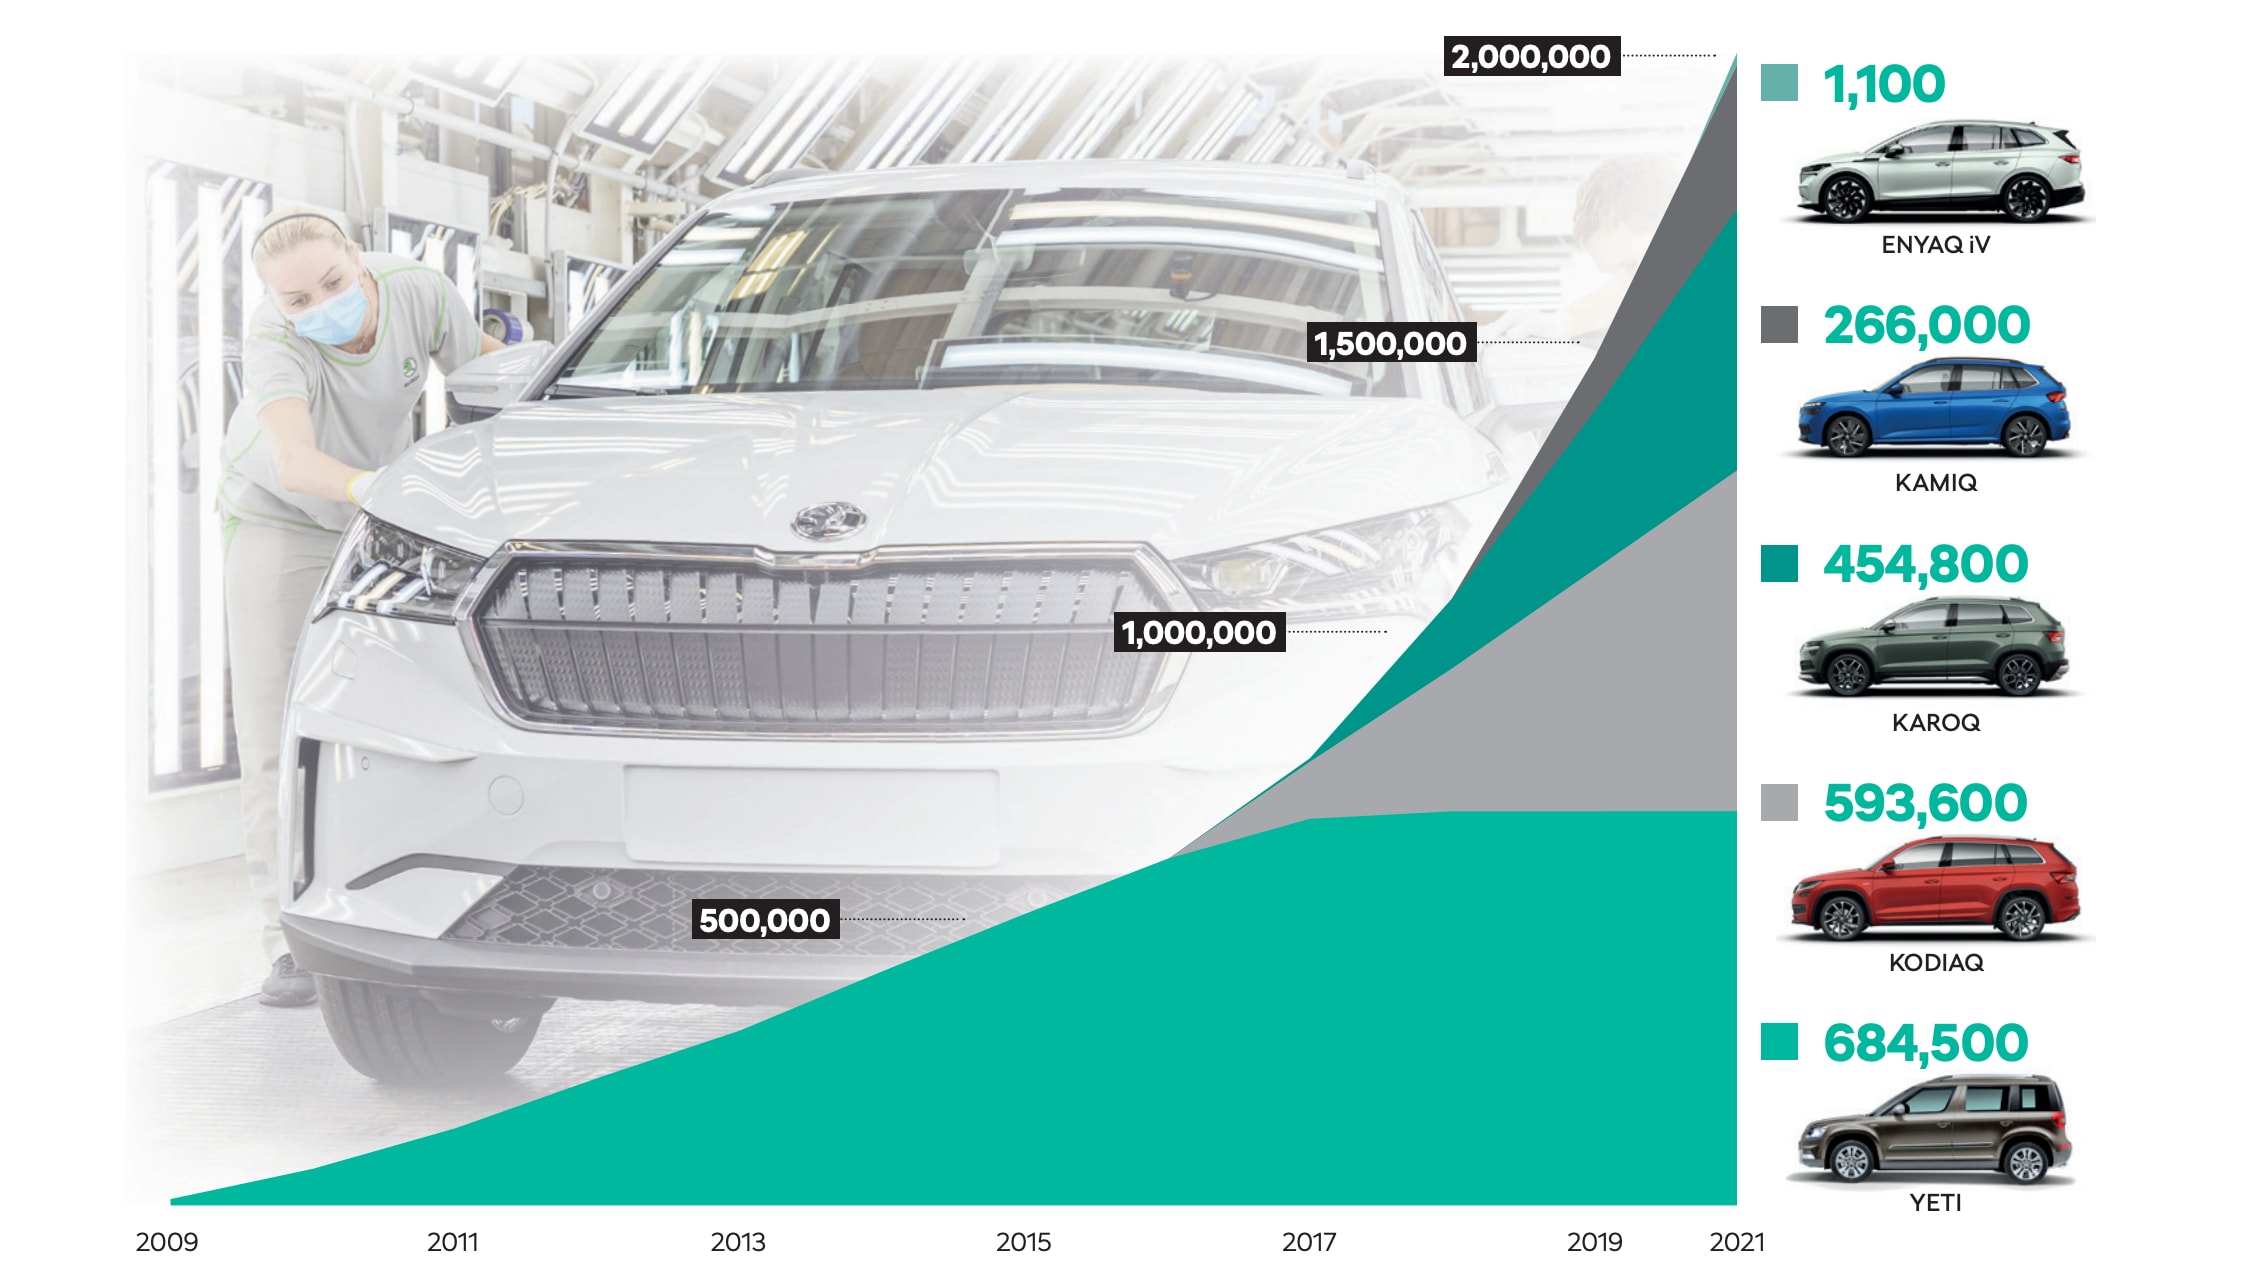 A break-up of how many SUVs Skoda has produced over the years.